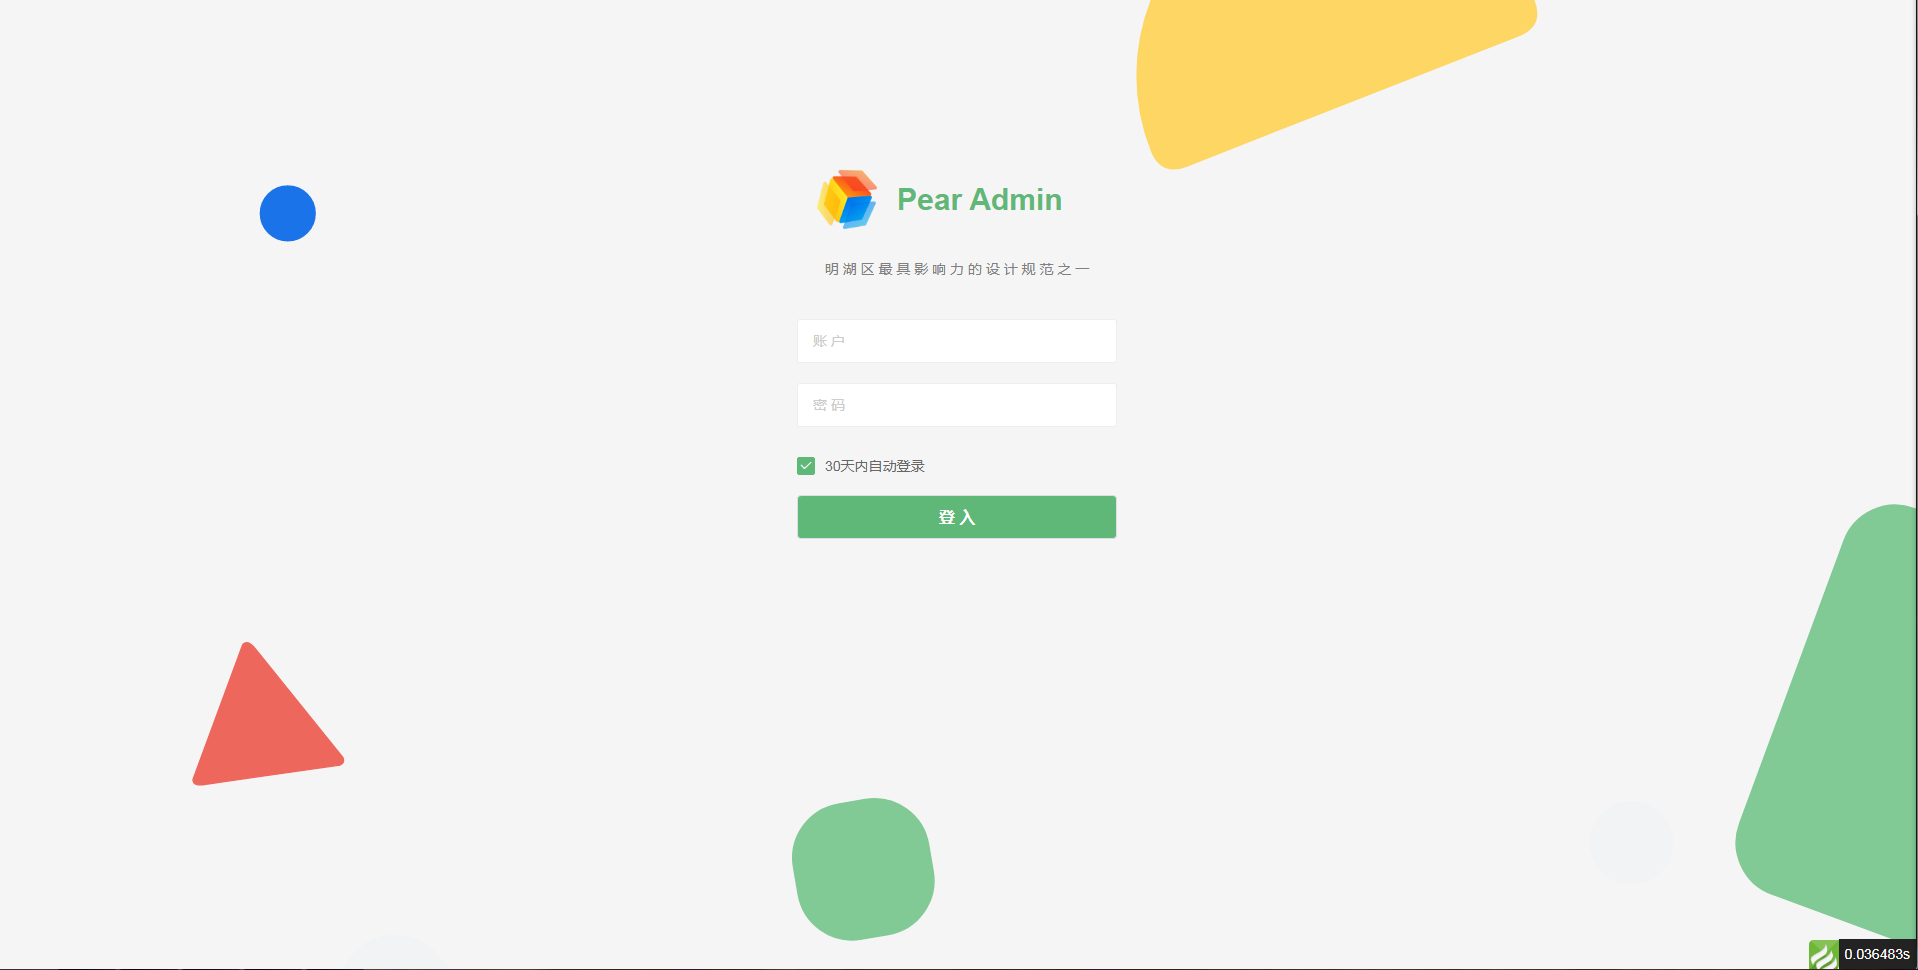 Pear Admin Think 2.0.0 Release 正式发布，新增全局主题，域名绑定